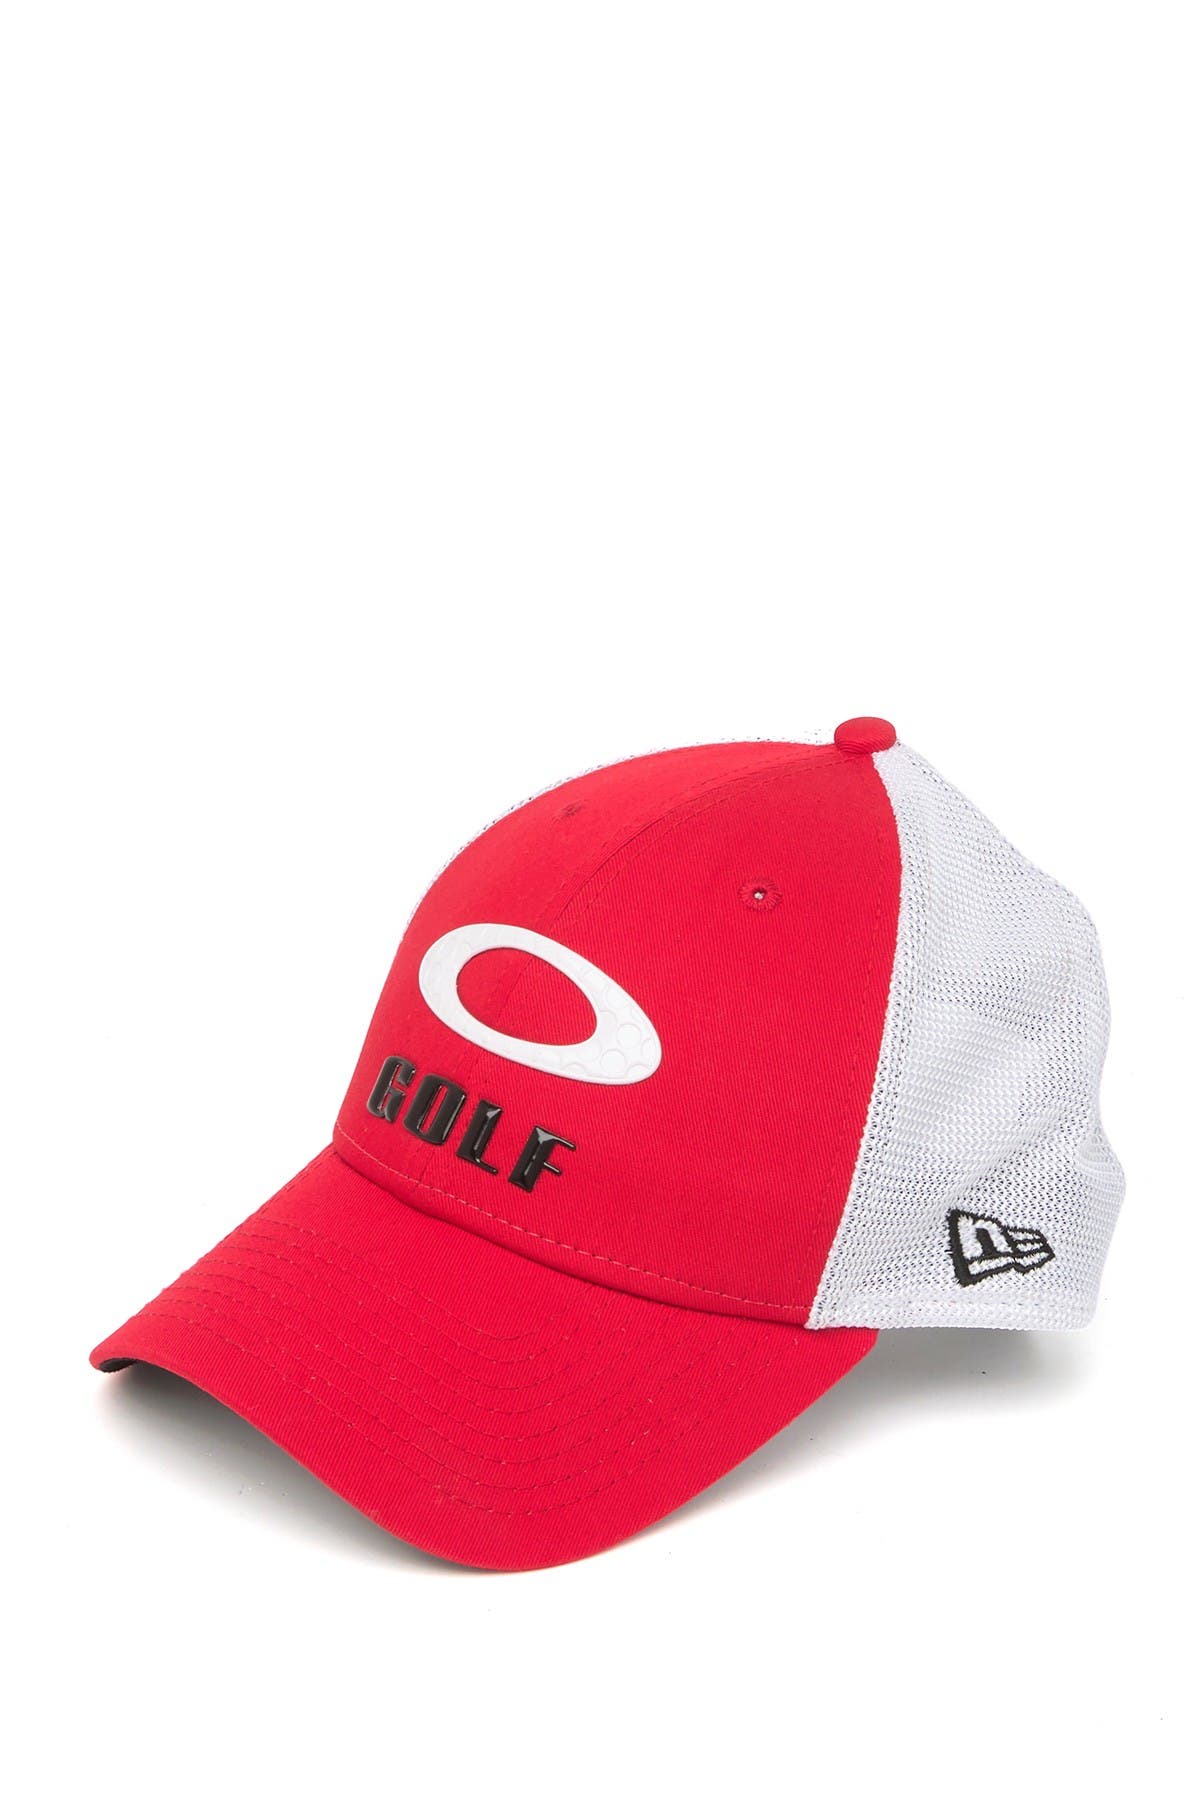 oakley golf cap